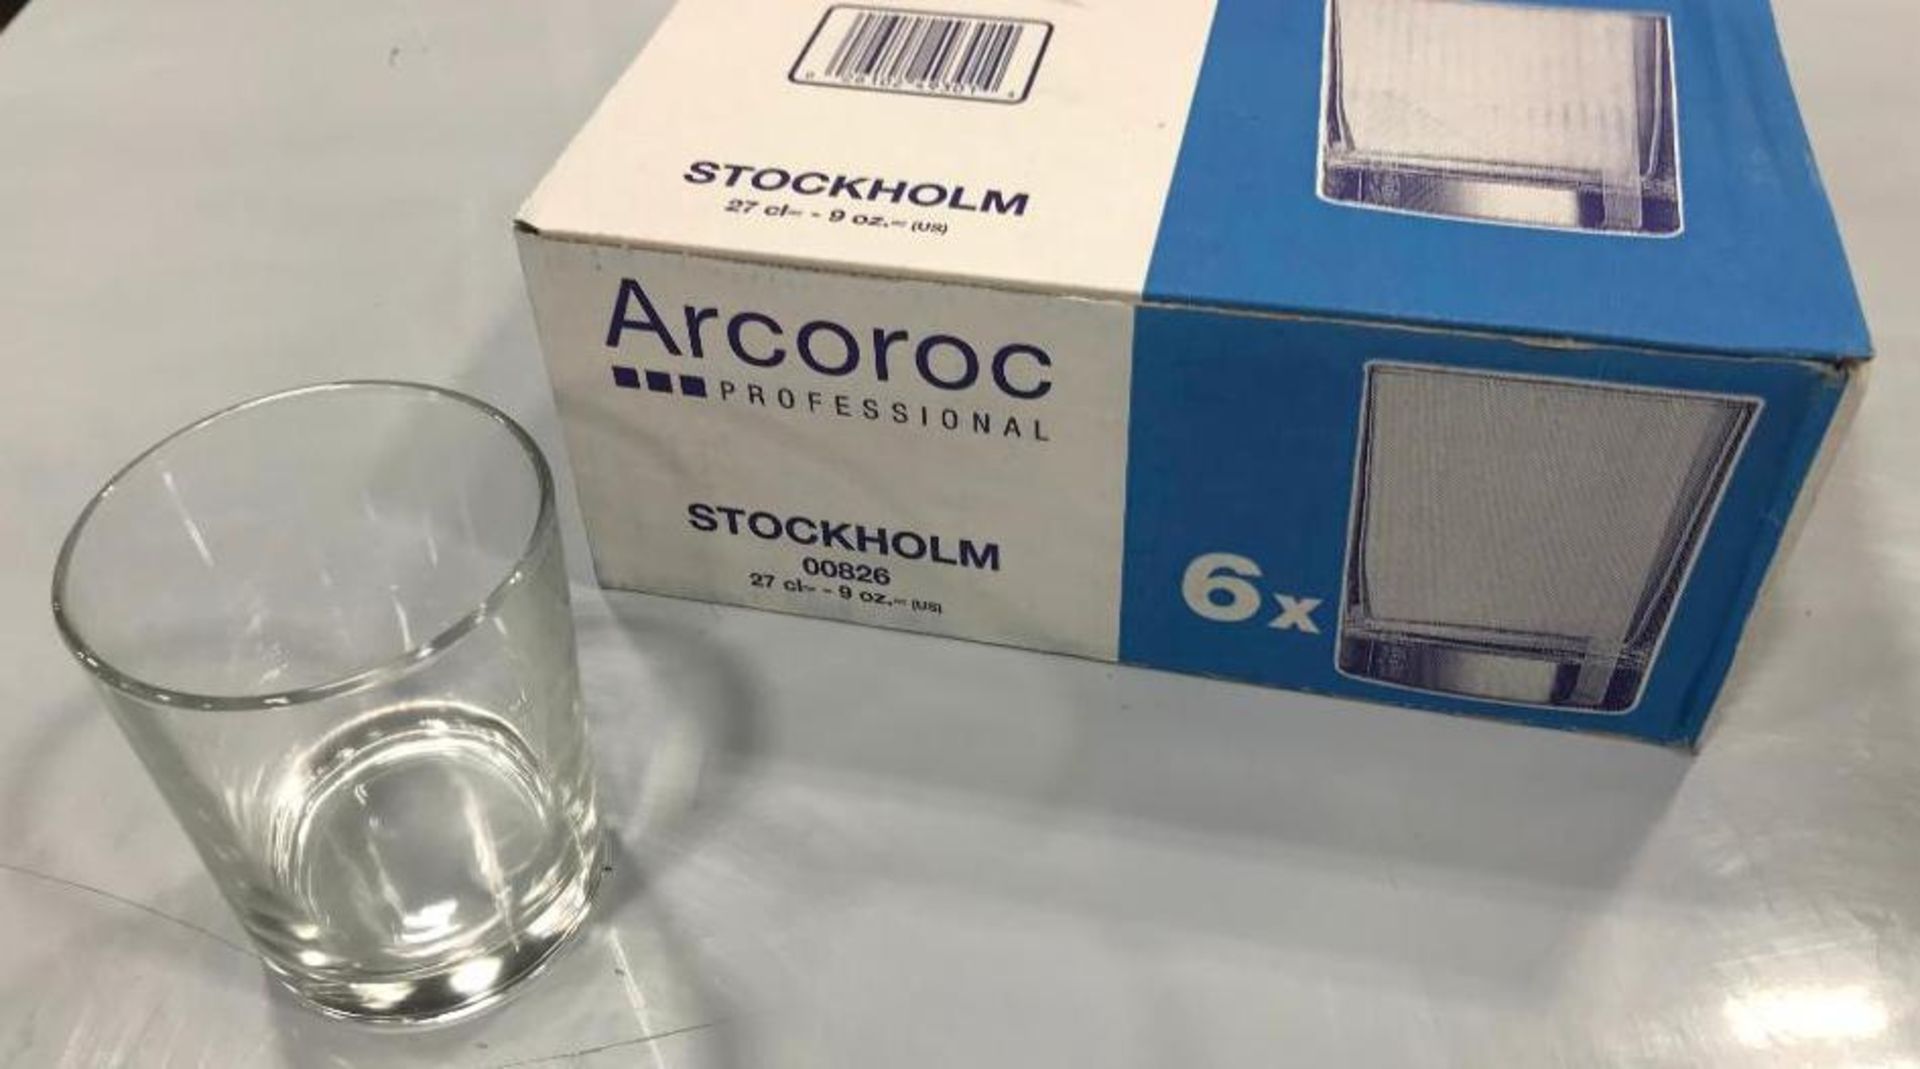 9.5OZ/270ML STOCKHOLM OLD FASHIONED GLASSES - BOX OF 6, ARCOROC 00826 - NEW